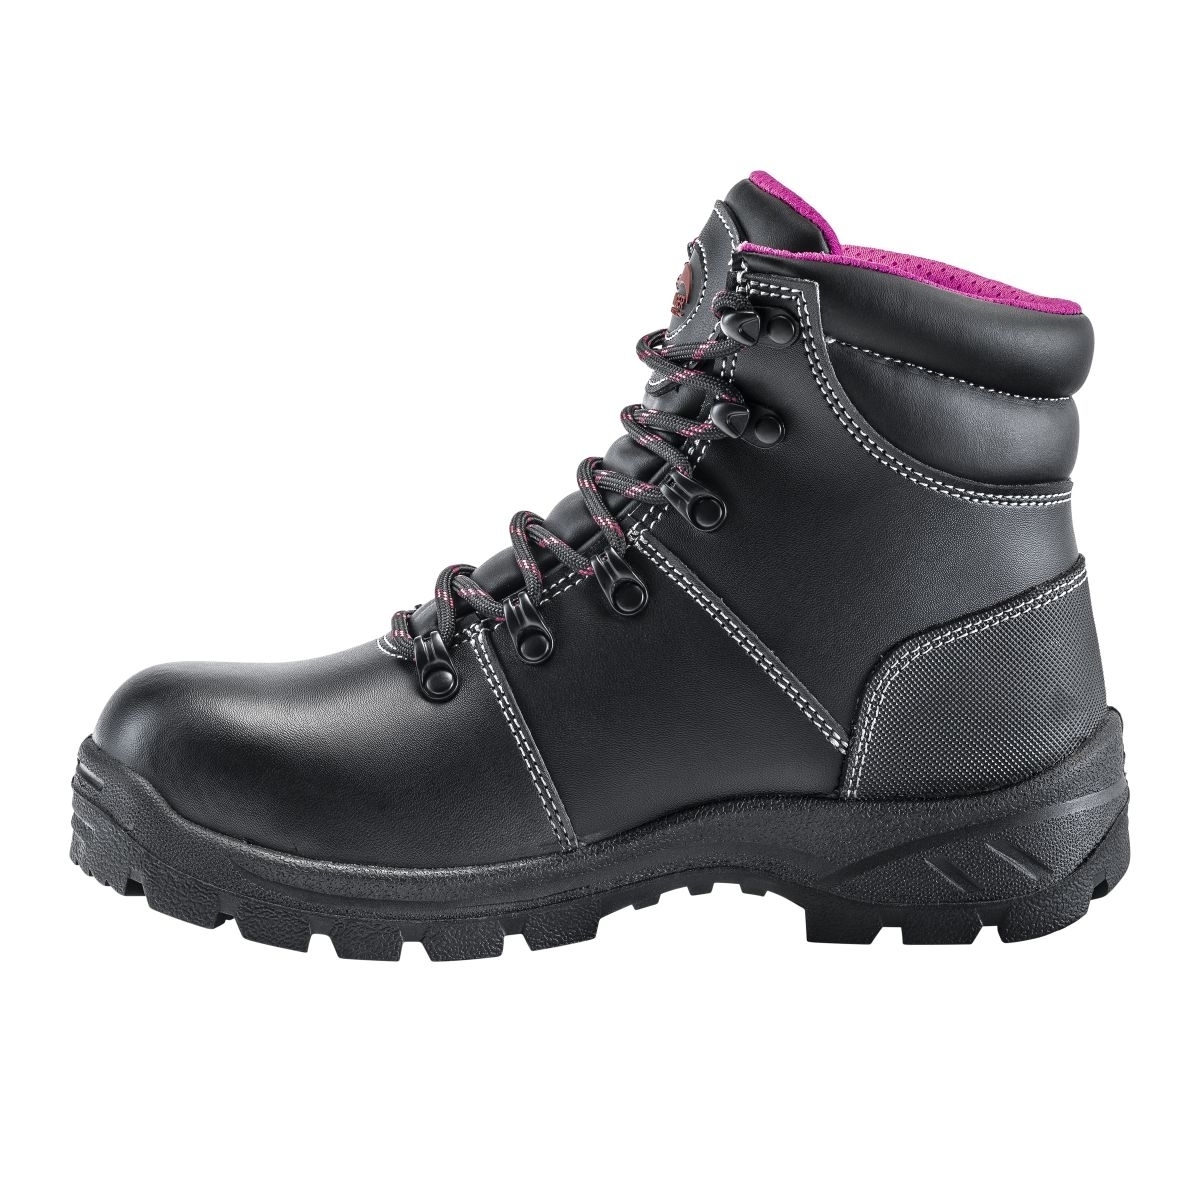 FSI FOOTWEAR SPECIALTIES INTERNATIONAL NAUTILUS Avenger Women's 6 Builder Steel Toe Waterproof EH Work Boots Black - A8124 BLACK - BLACK, 9